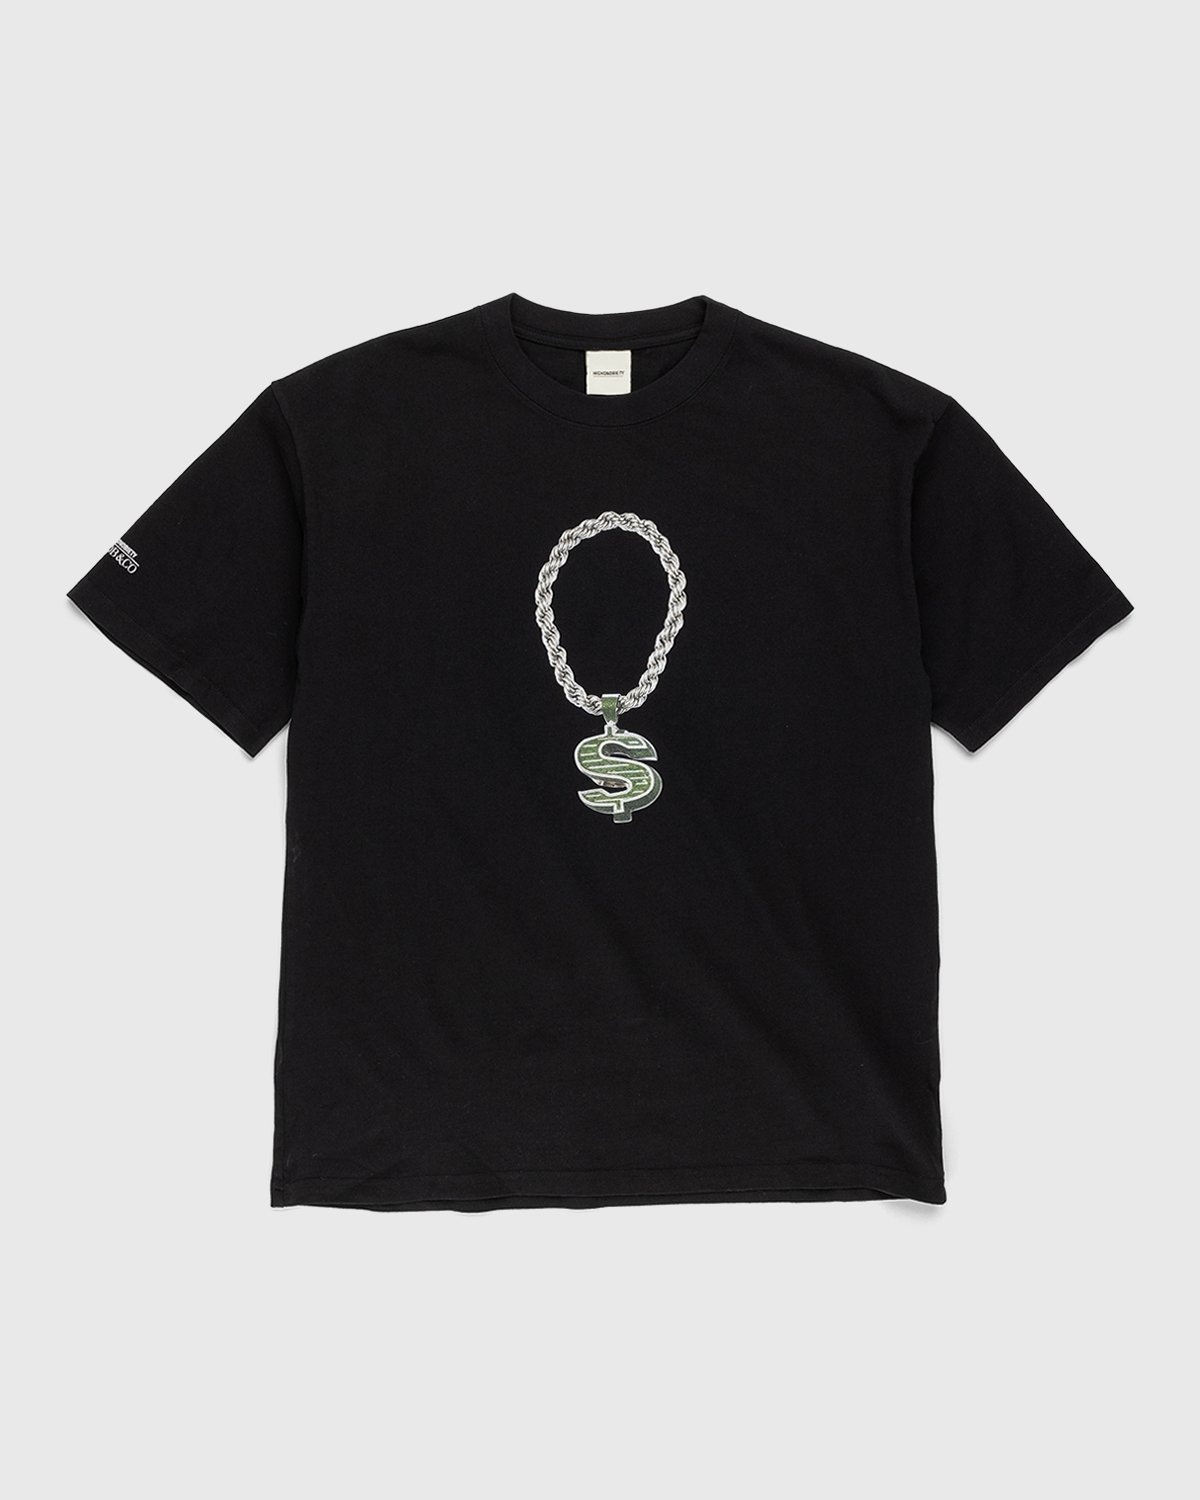 Jacob & Co. x Highsnobiety – Dollar Sign Pendant T-Shirt Black - Tops - Black - Image 1